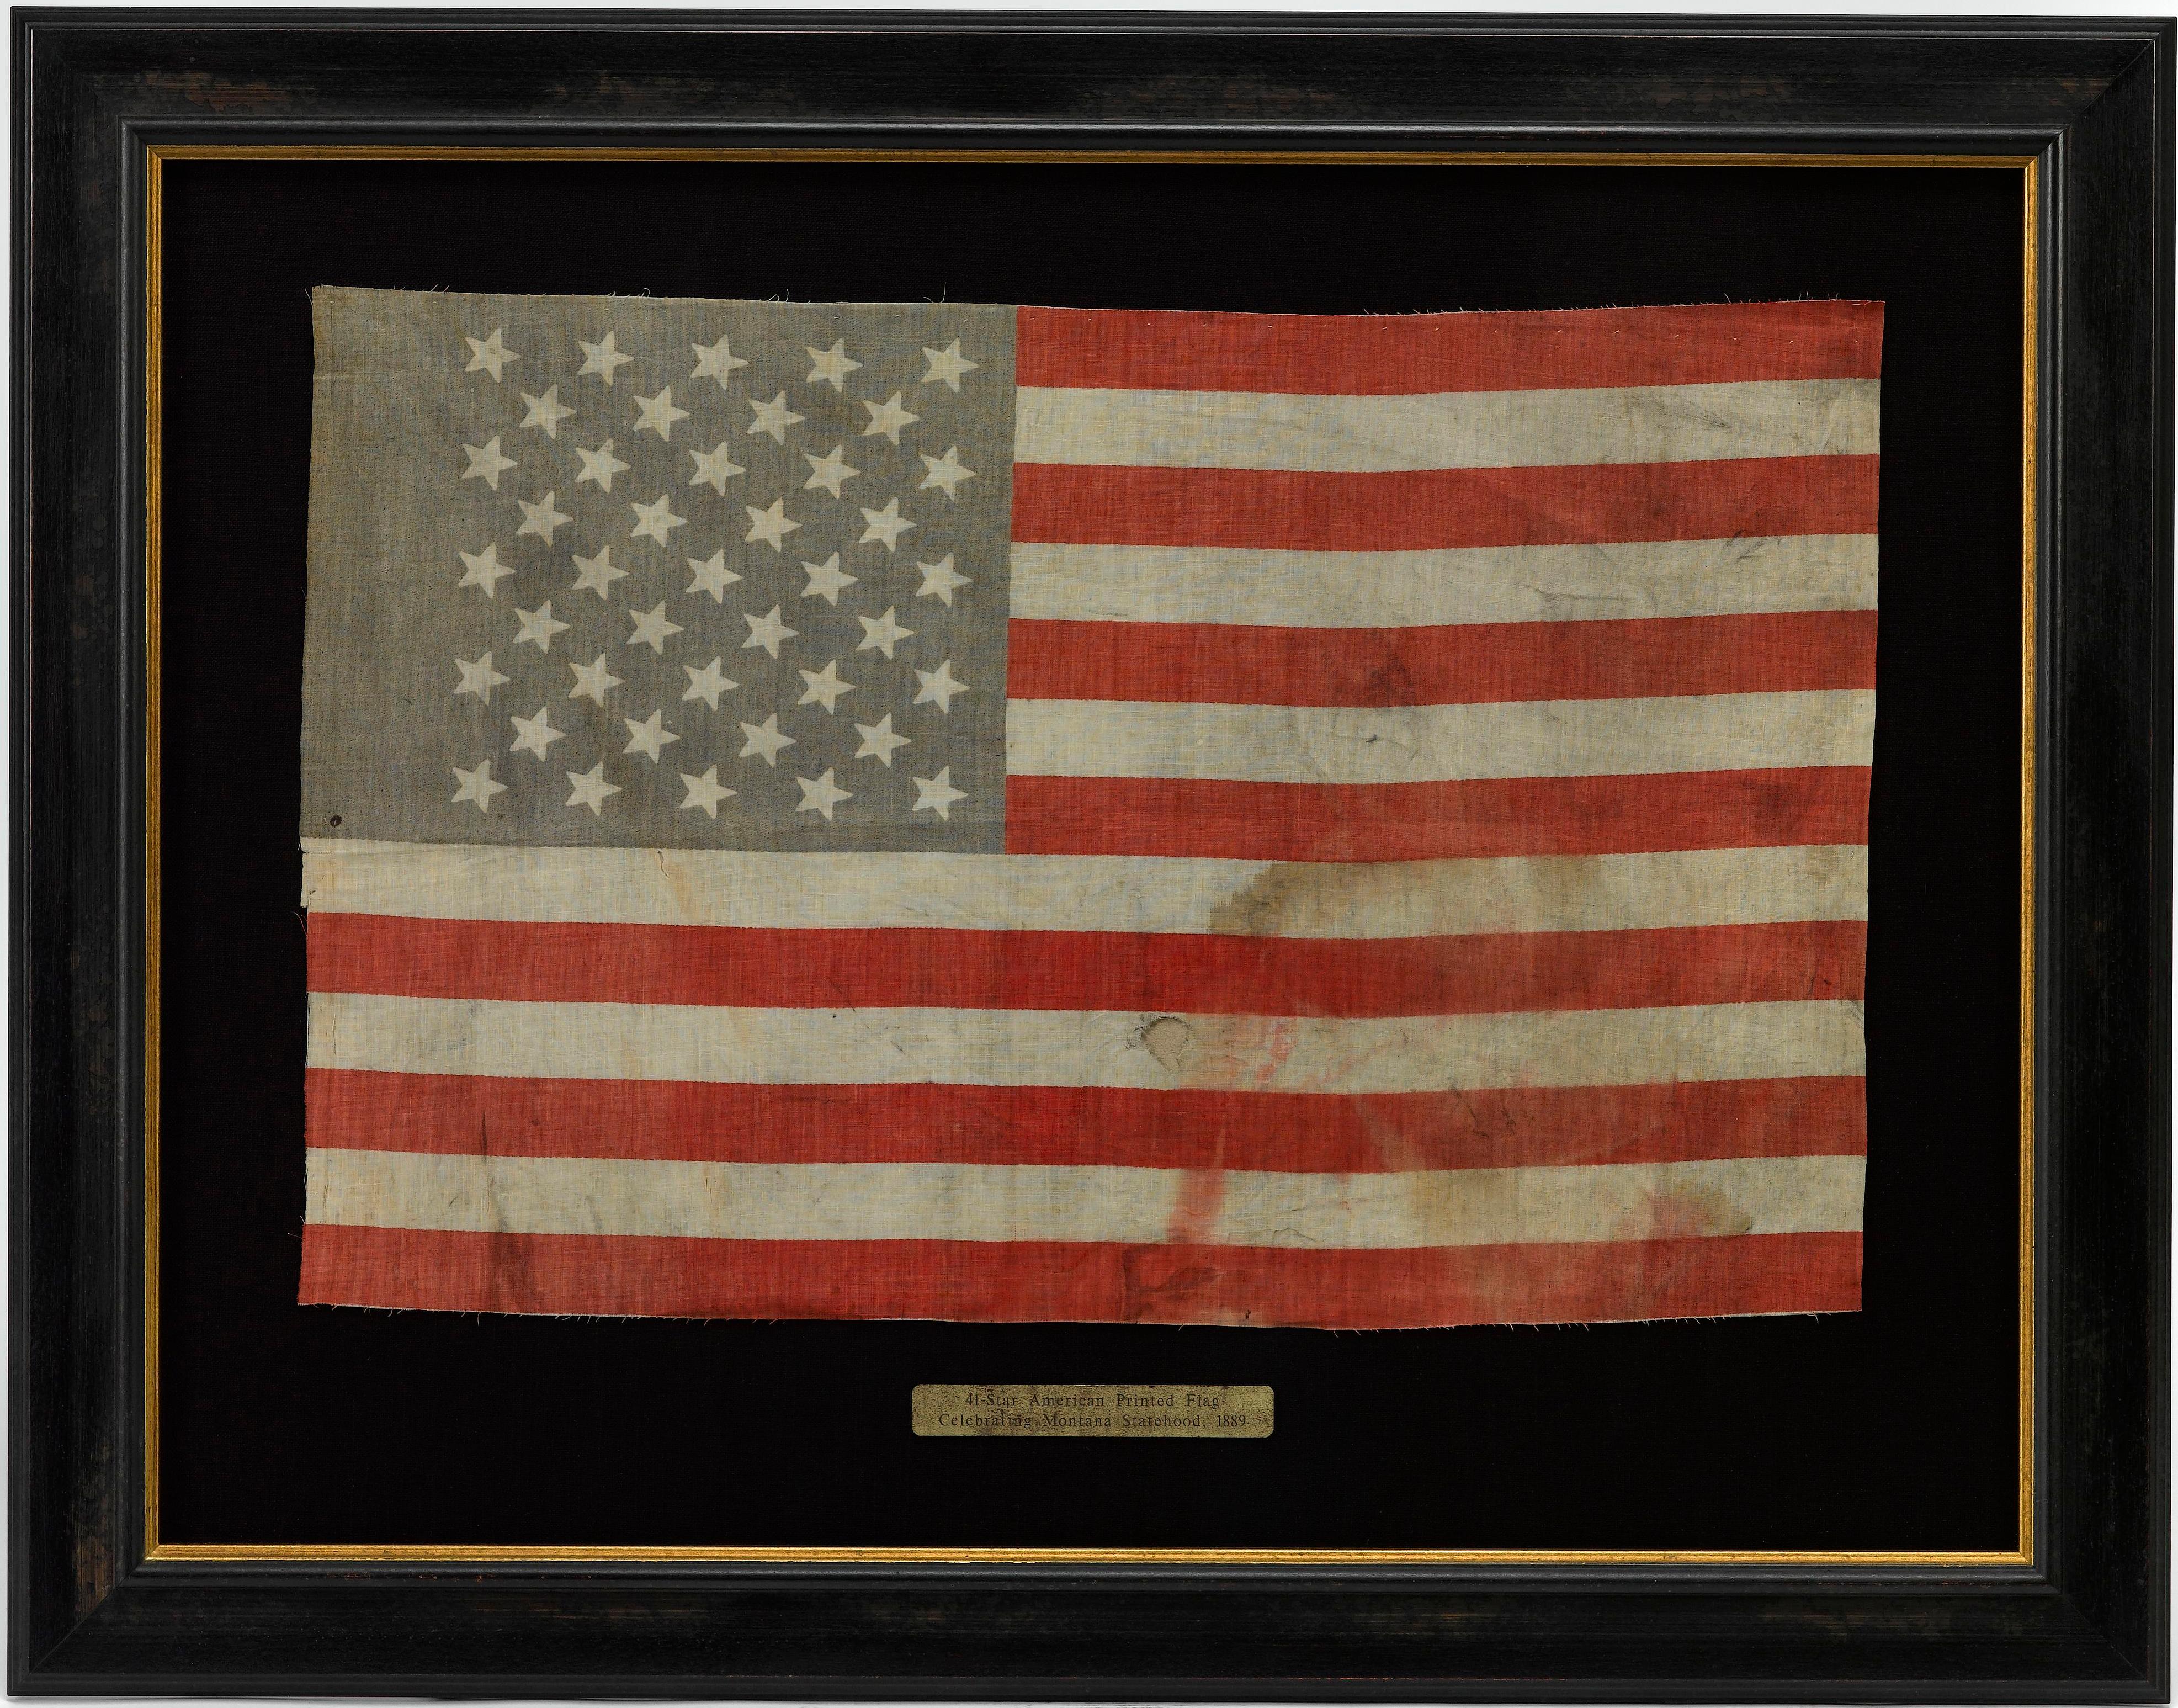 Linen 41-Star American Printed Flag, Celebrating Montana Statehood, 1889